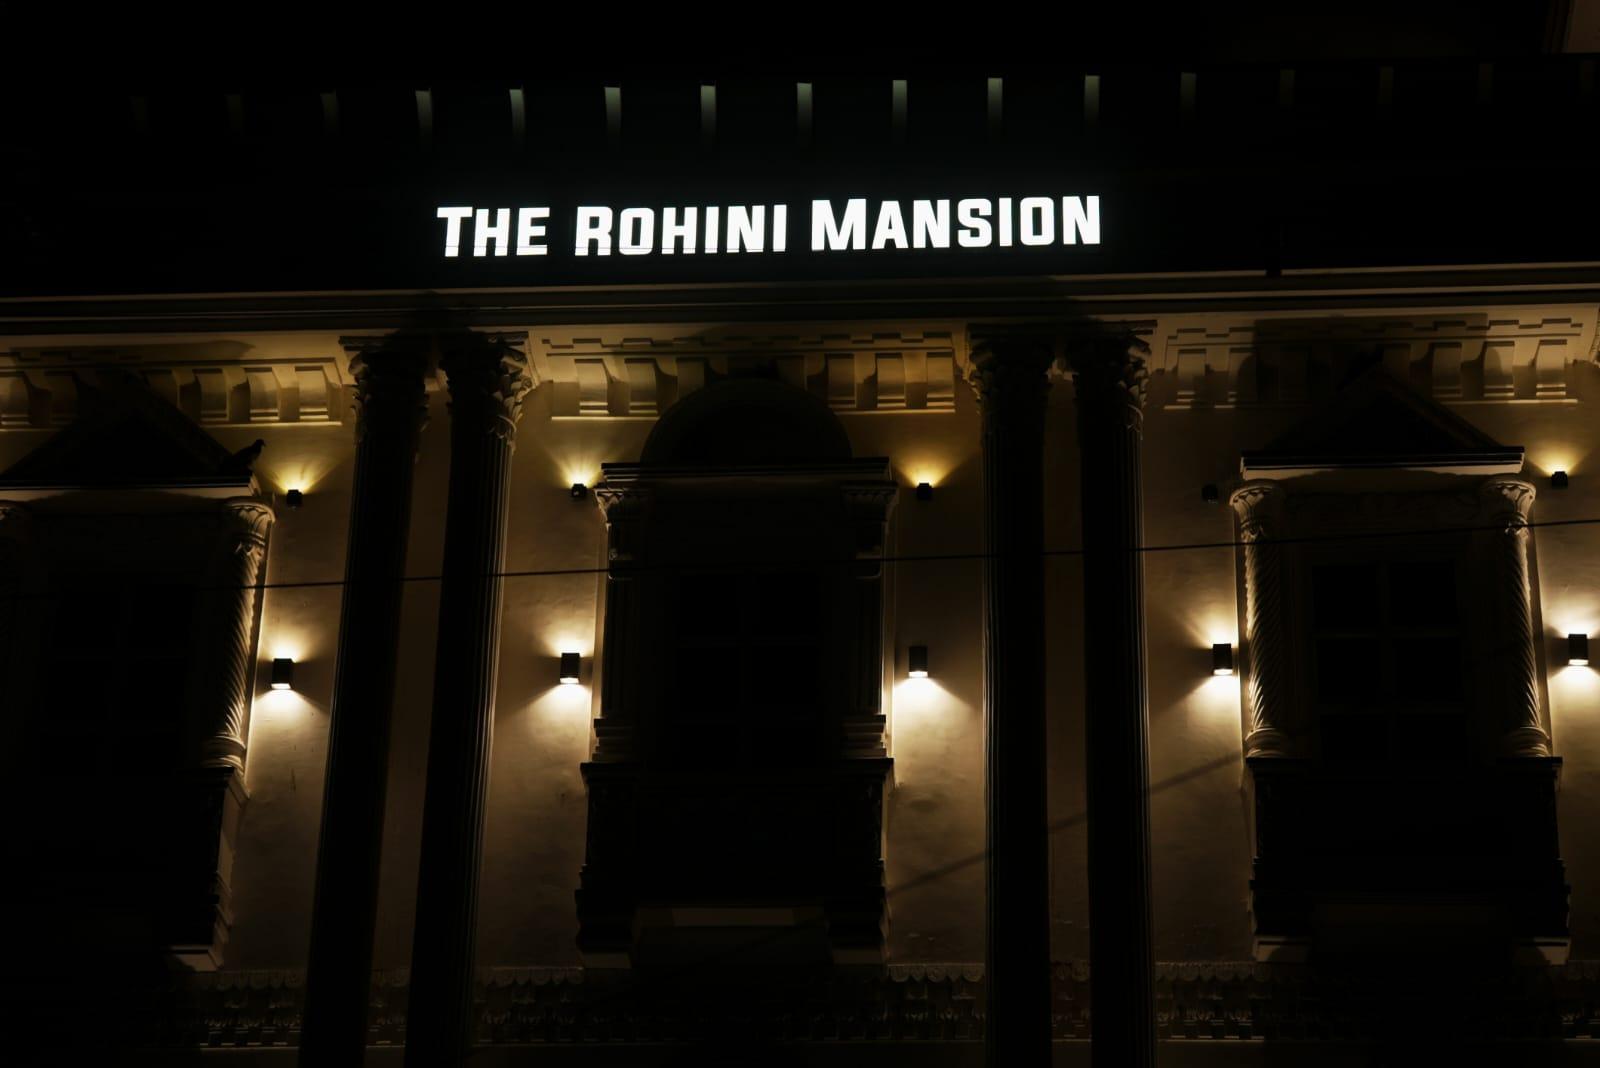 The Rohini Mansion By The Monsoon And Pearl Palace - Yamunanagar